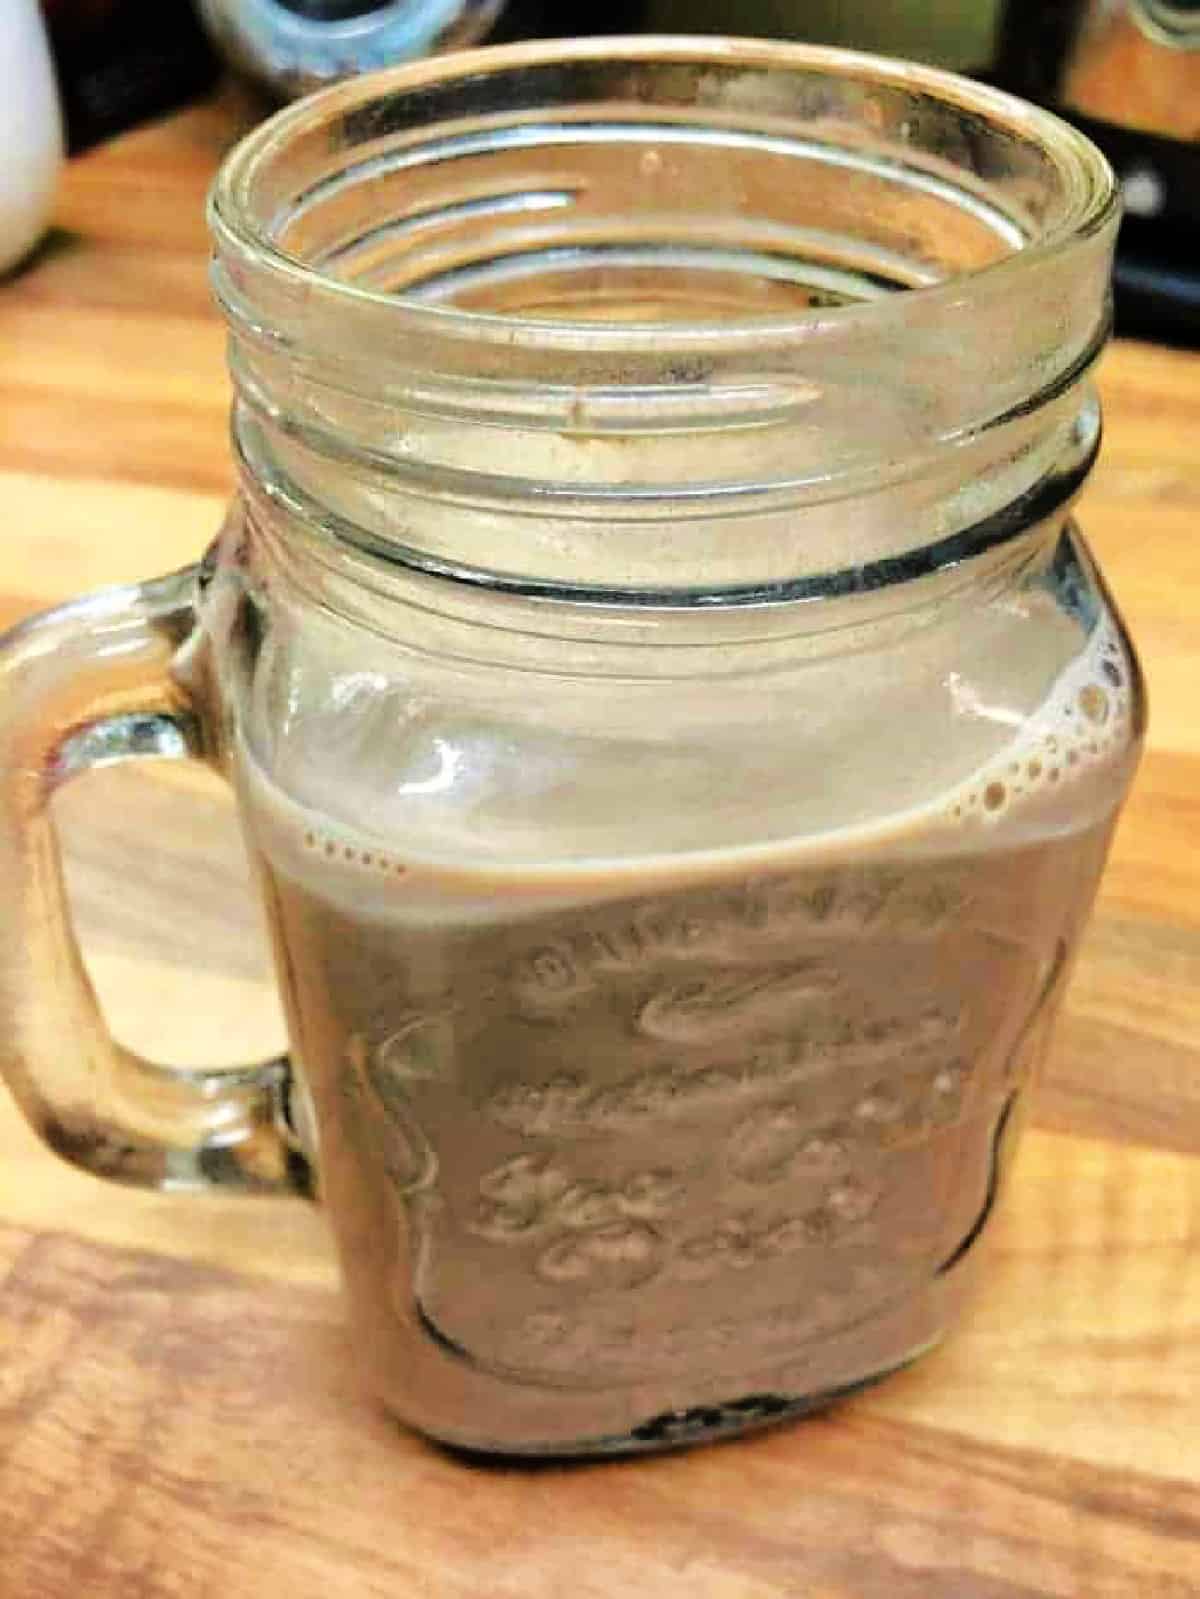 A glass mug jar of hot chocolate.